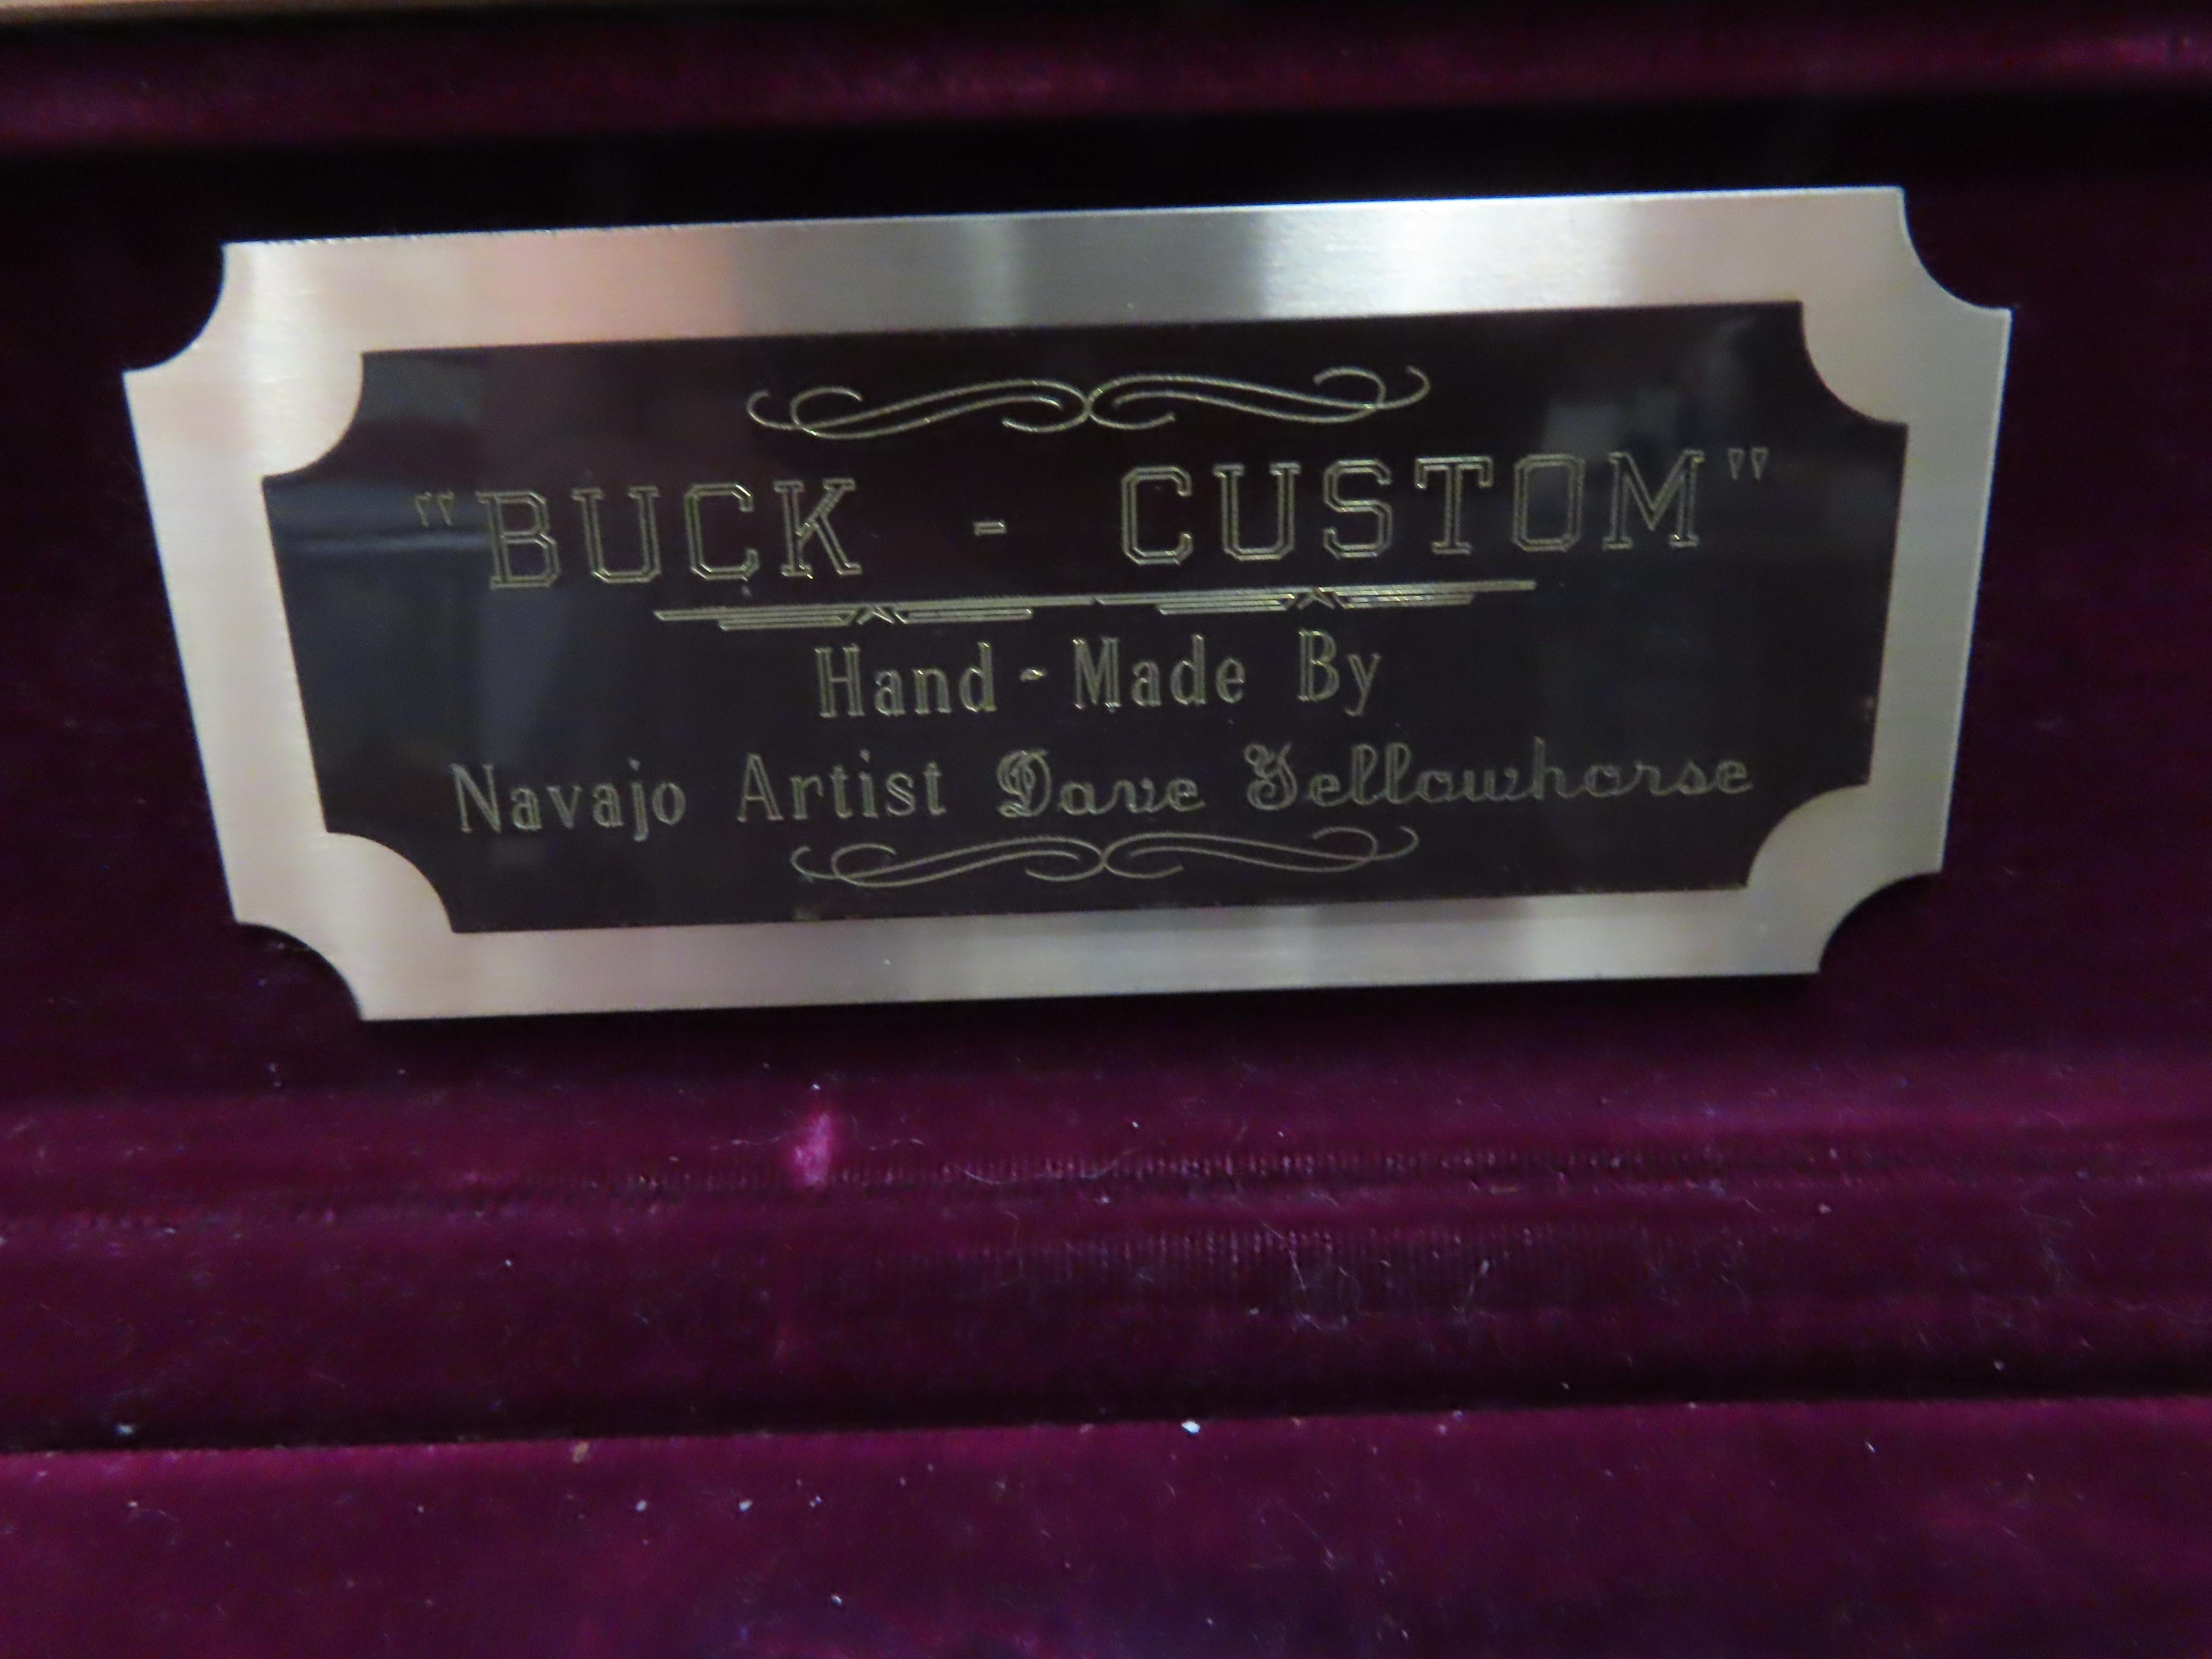 Vintage Buck - Custom, handmade by Navajo Dave Yelllowhorse, Buck 110, turquoise inlaid in